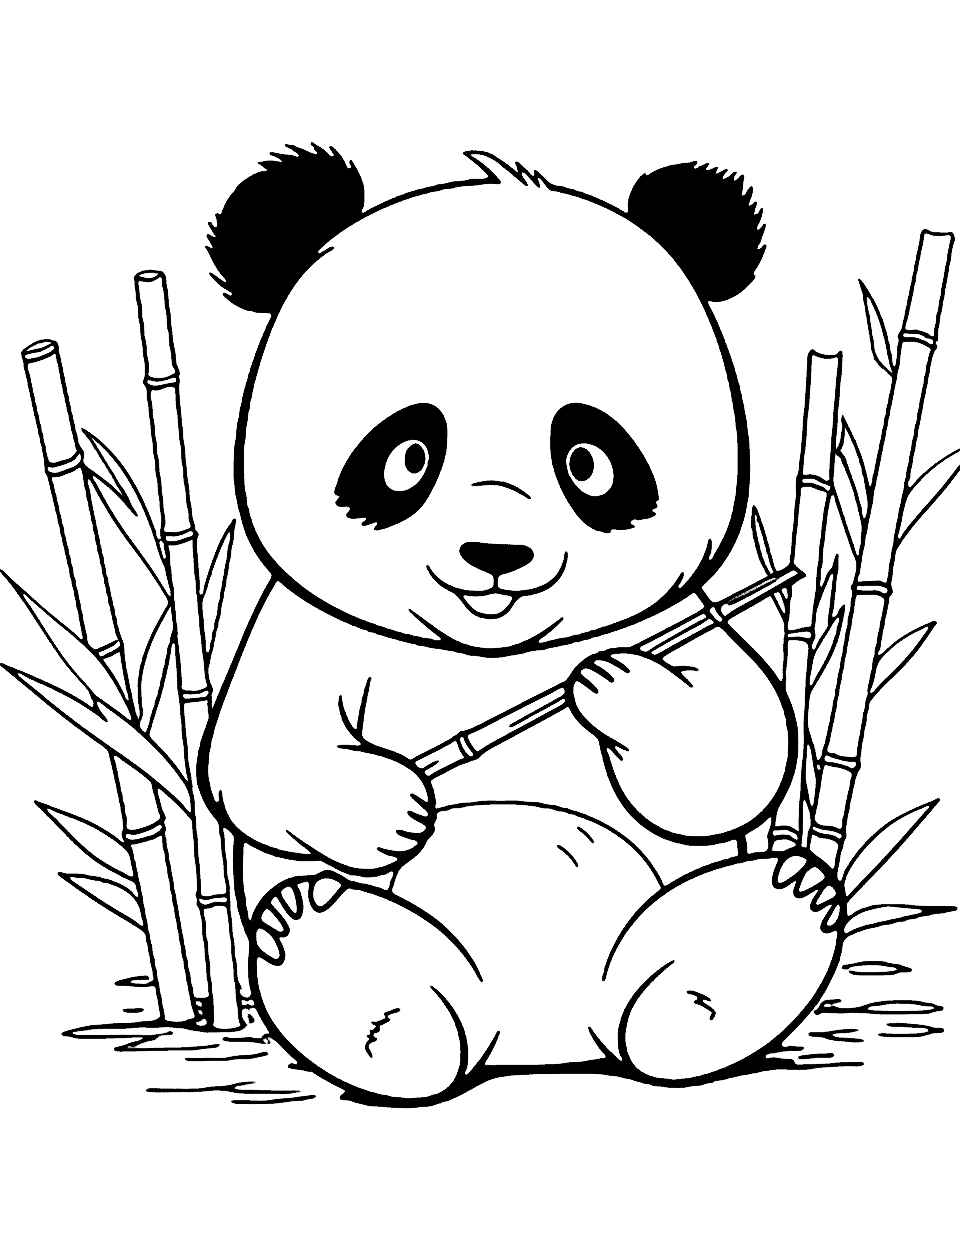 Kawaii Panda With Bamboo Cute Coloring Page - A chubby panda holding a bamboo shoot and eating it.